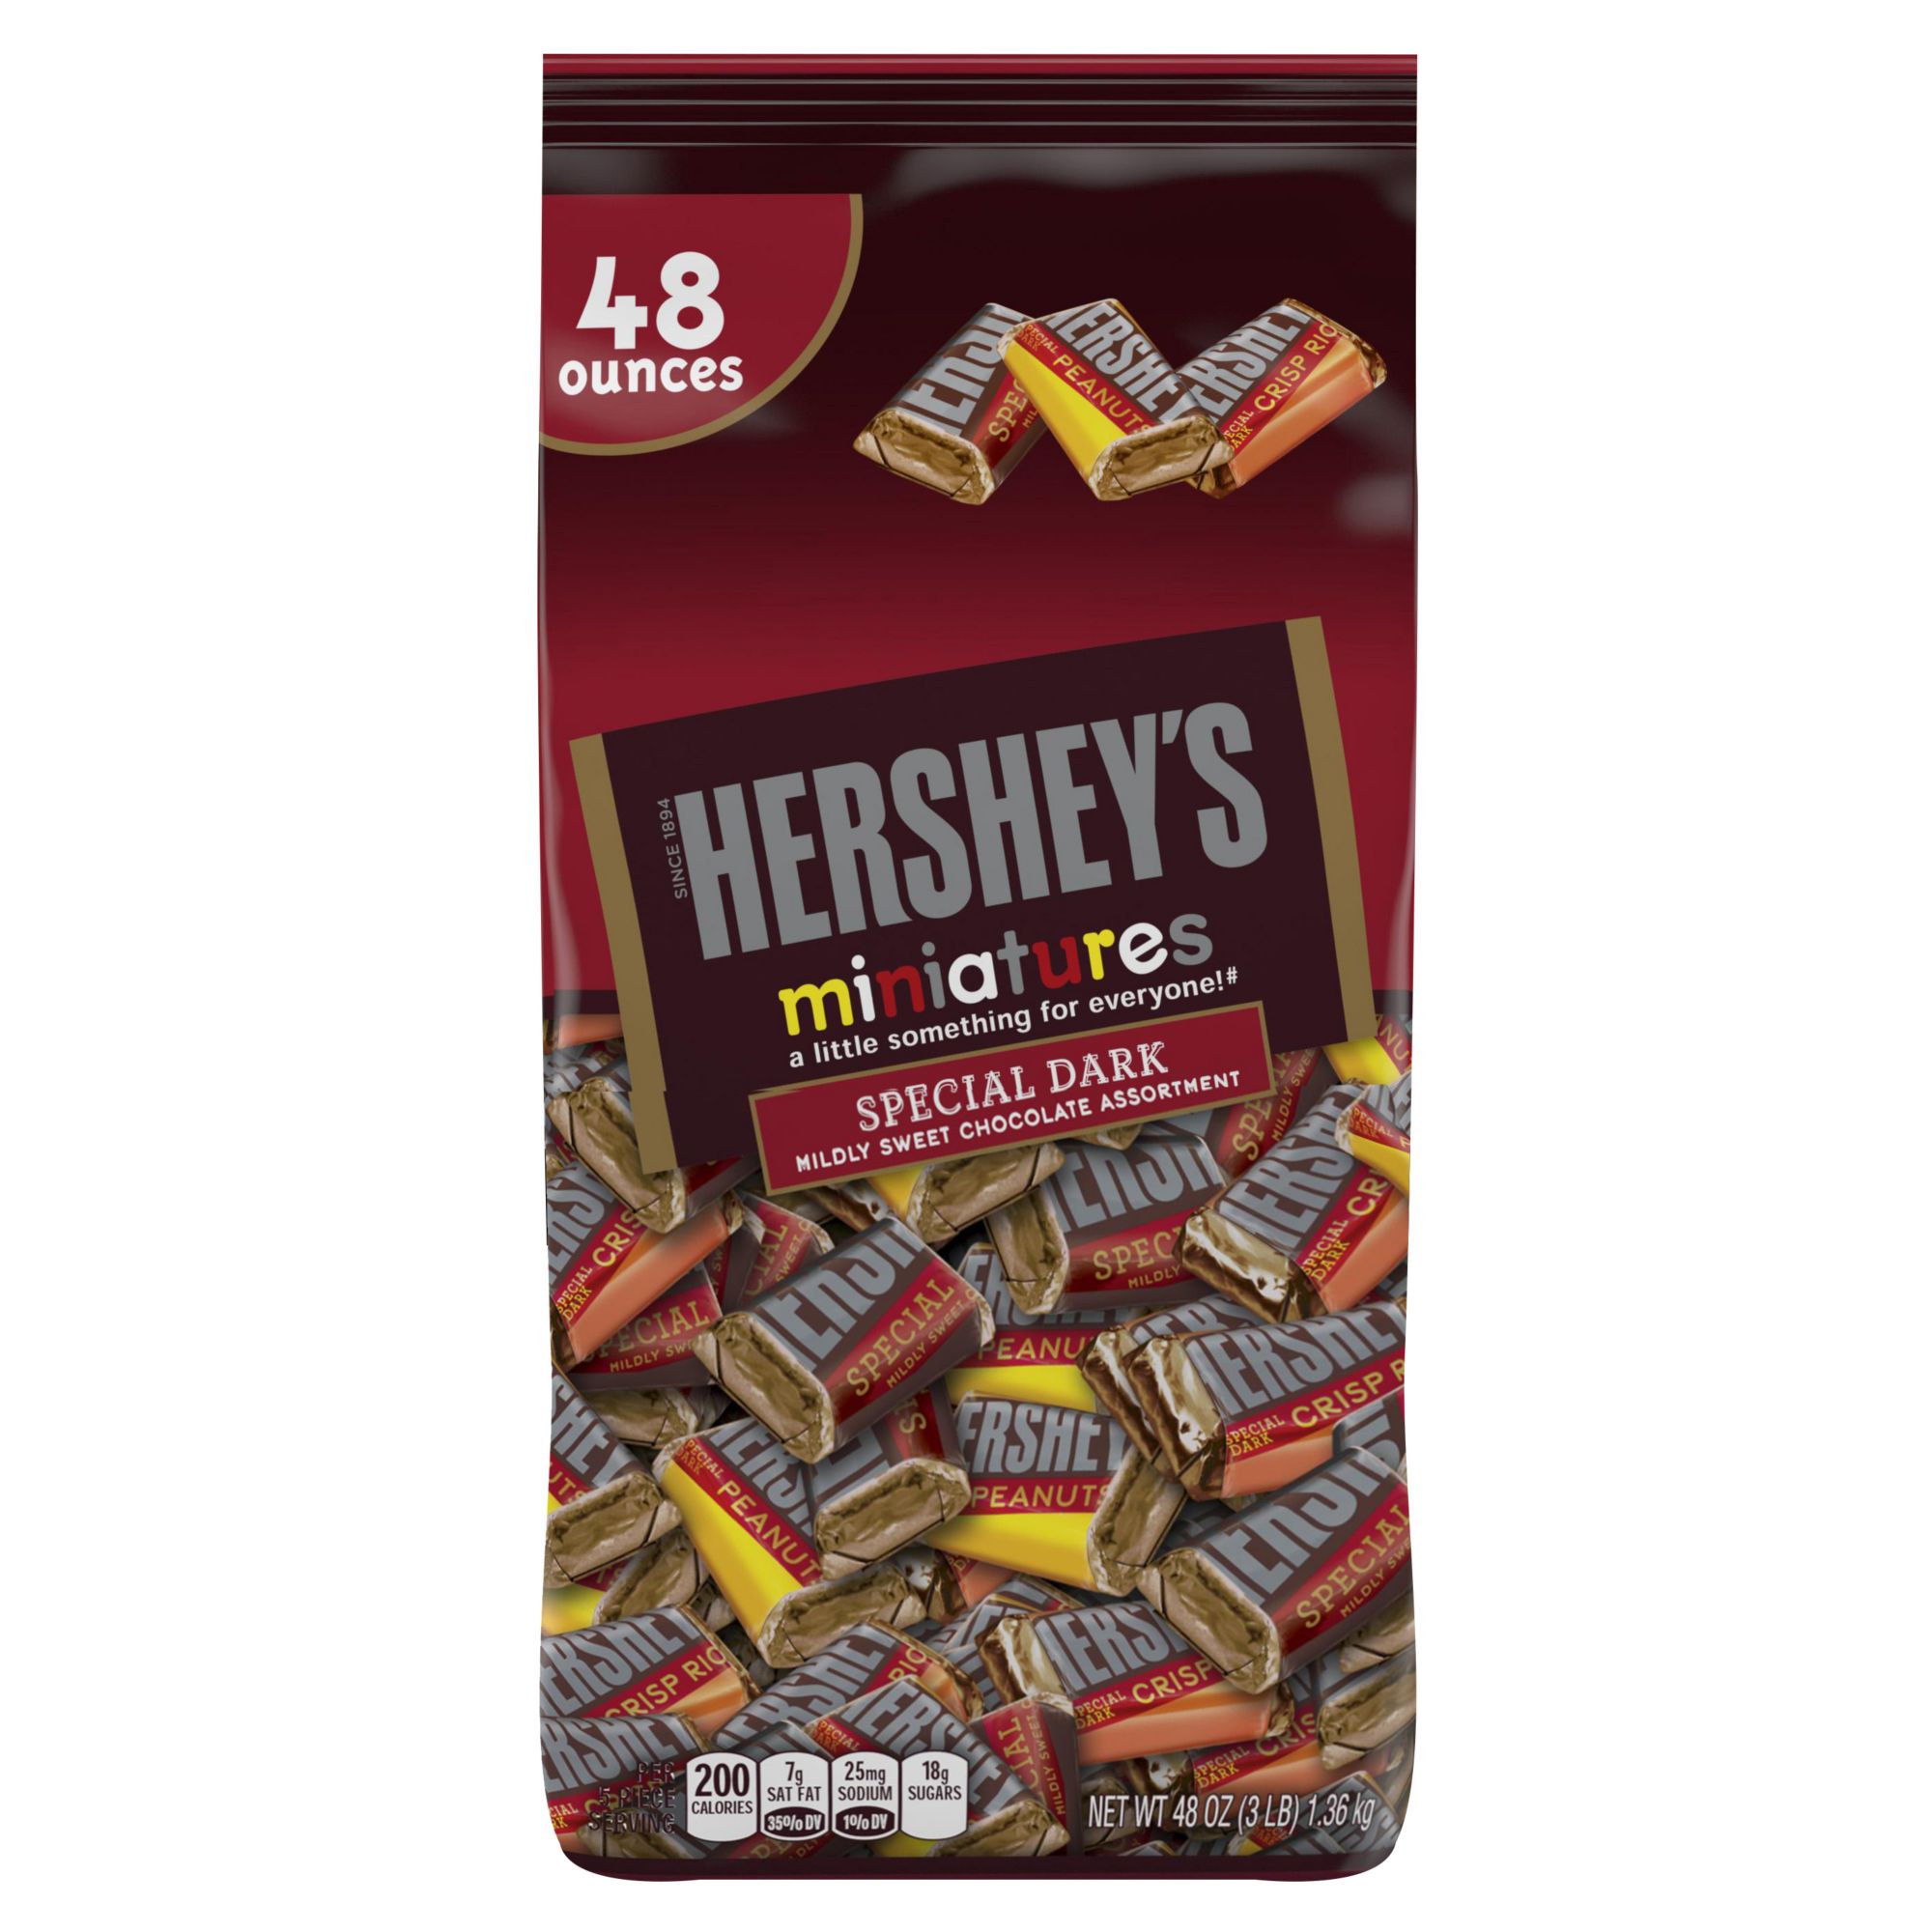 Hershey's Special Dark Chocolate Miniatures, 48 oz.